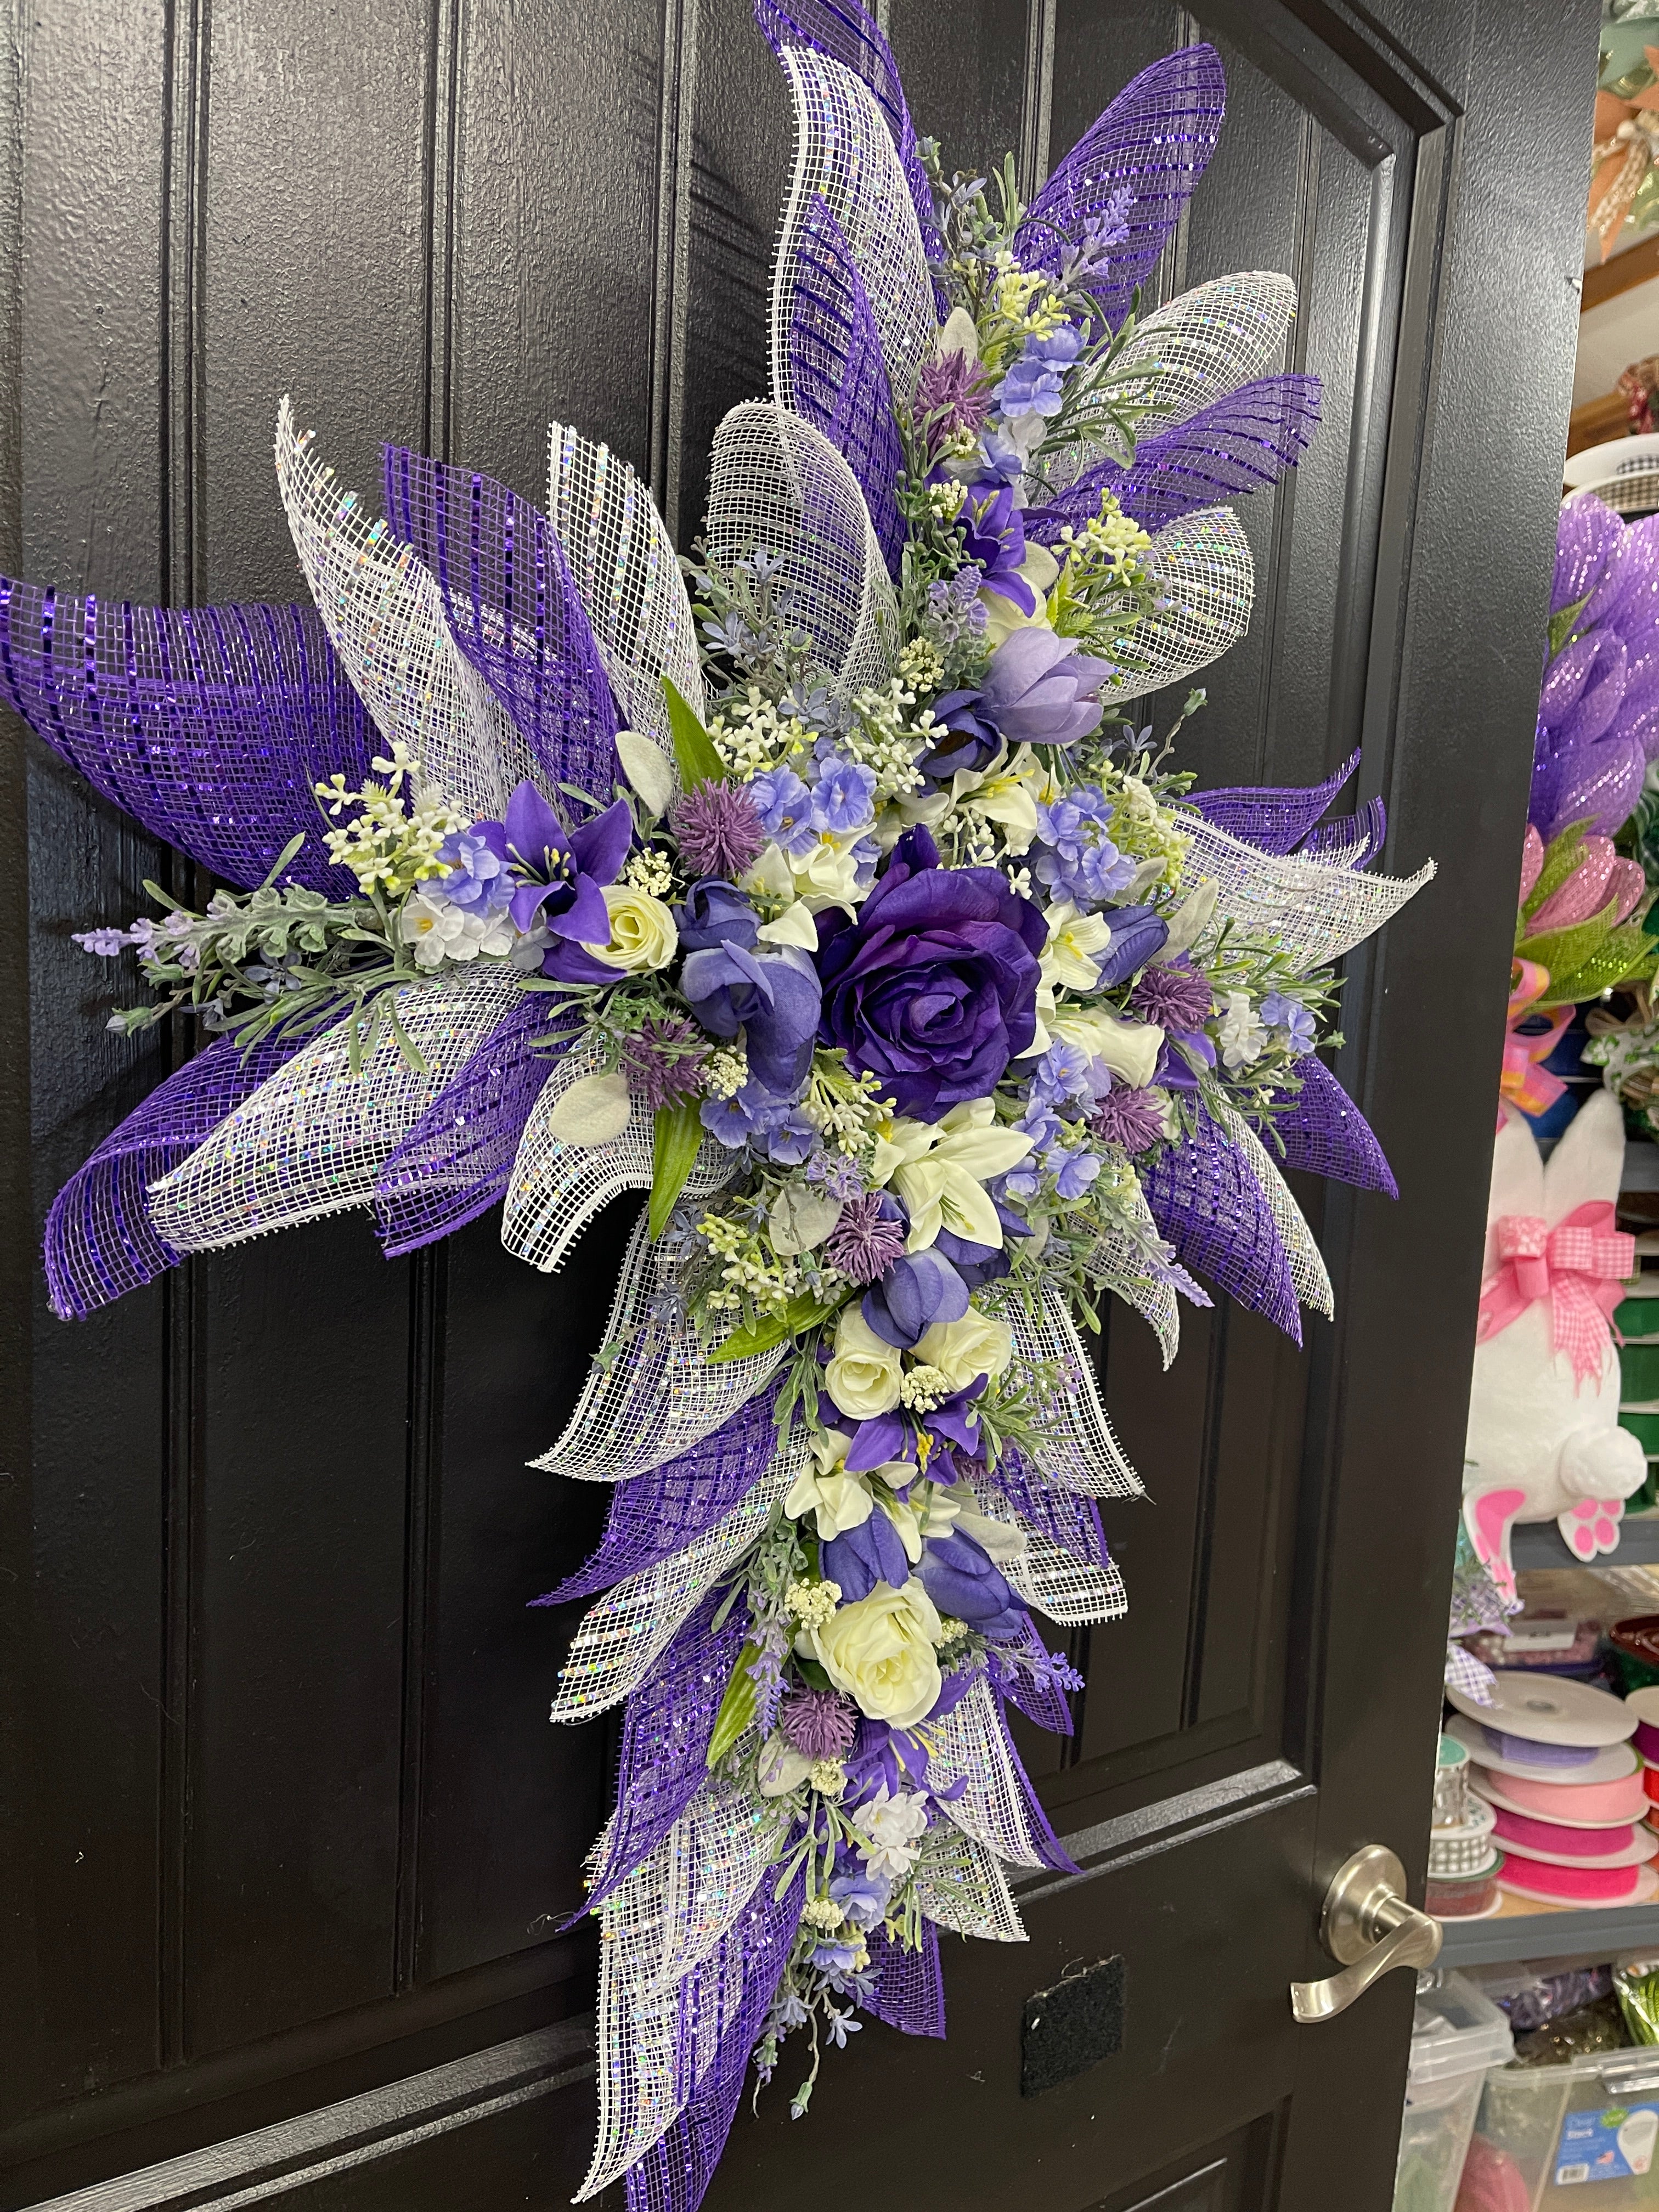 Purple Floral Cross Wreath